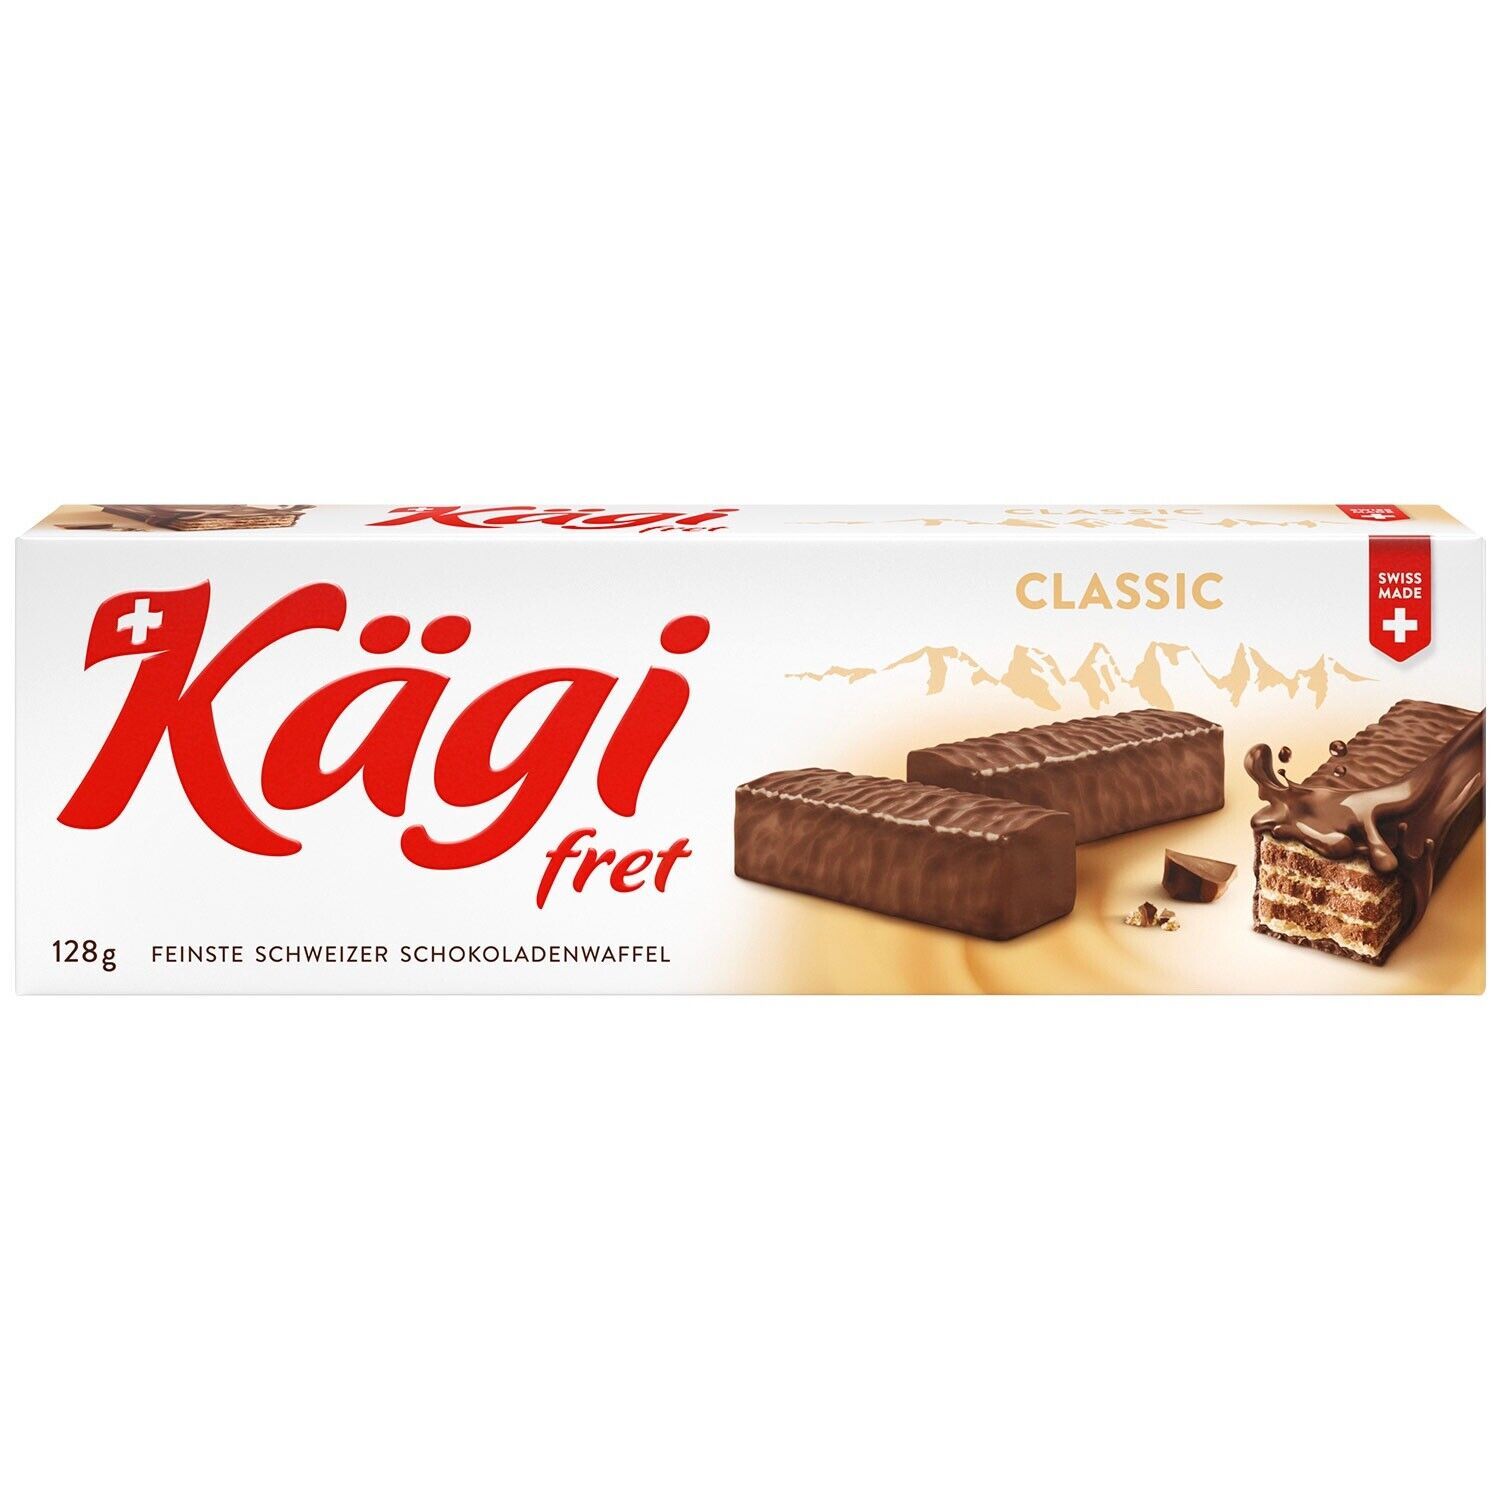 Kagi Fret Classic SWISS chocolate candy bars -Made in Switzerland 128g FREE SHIP - $12.86